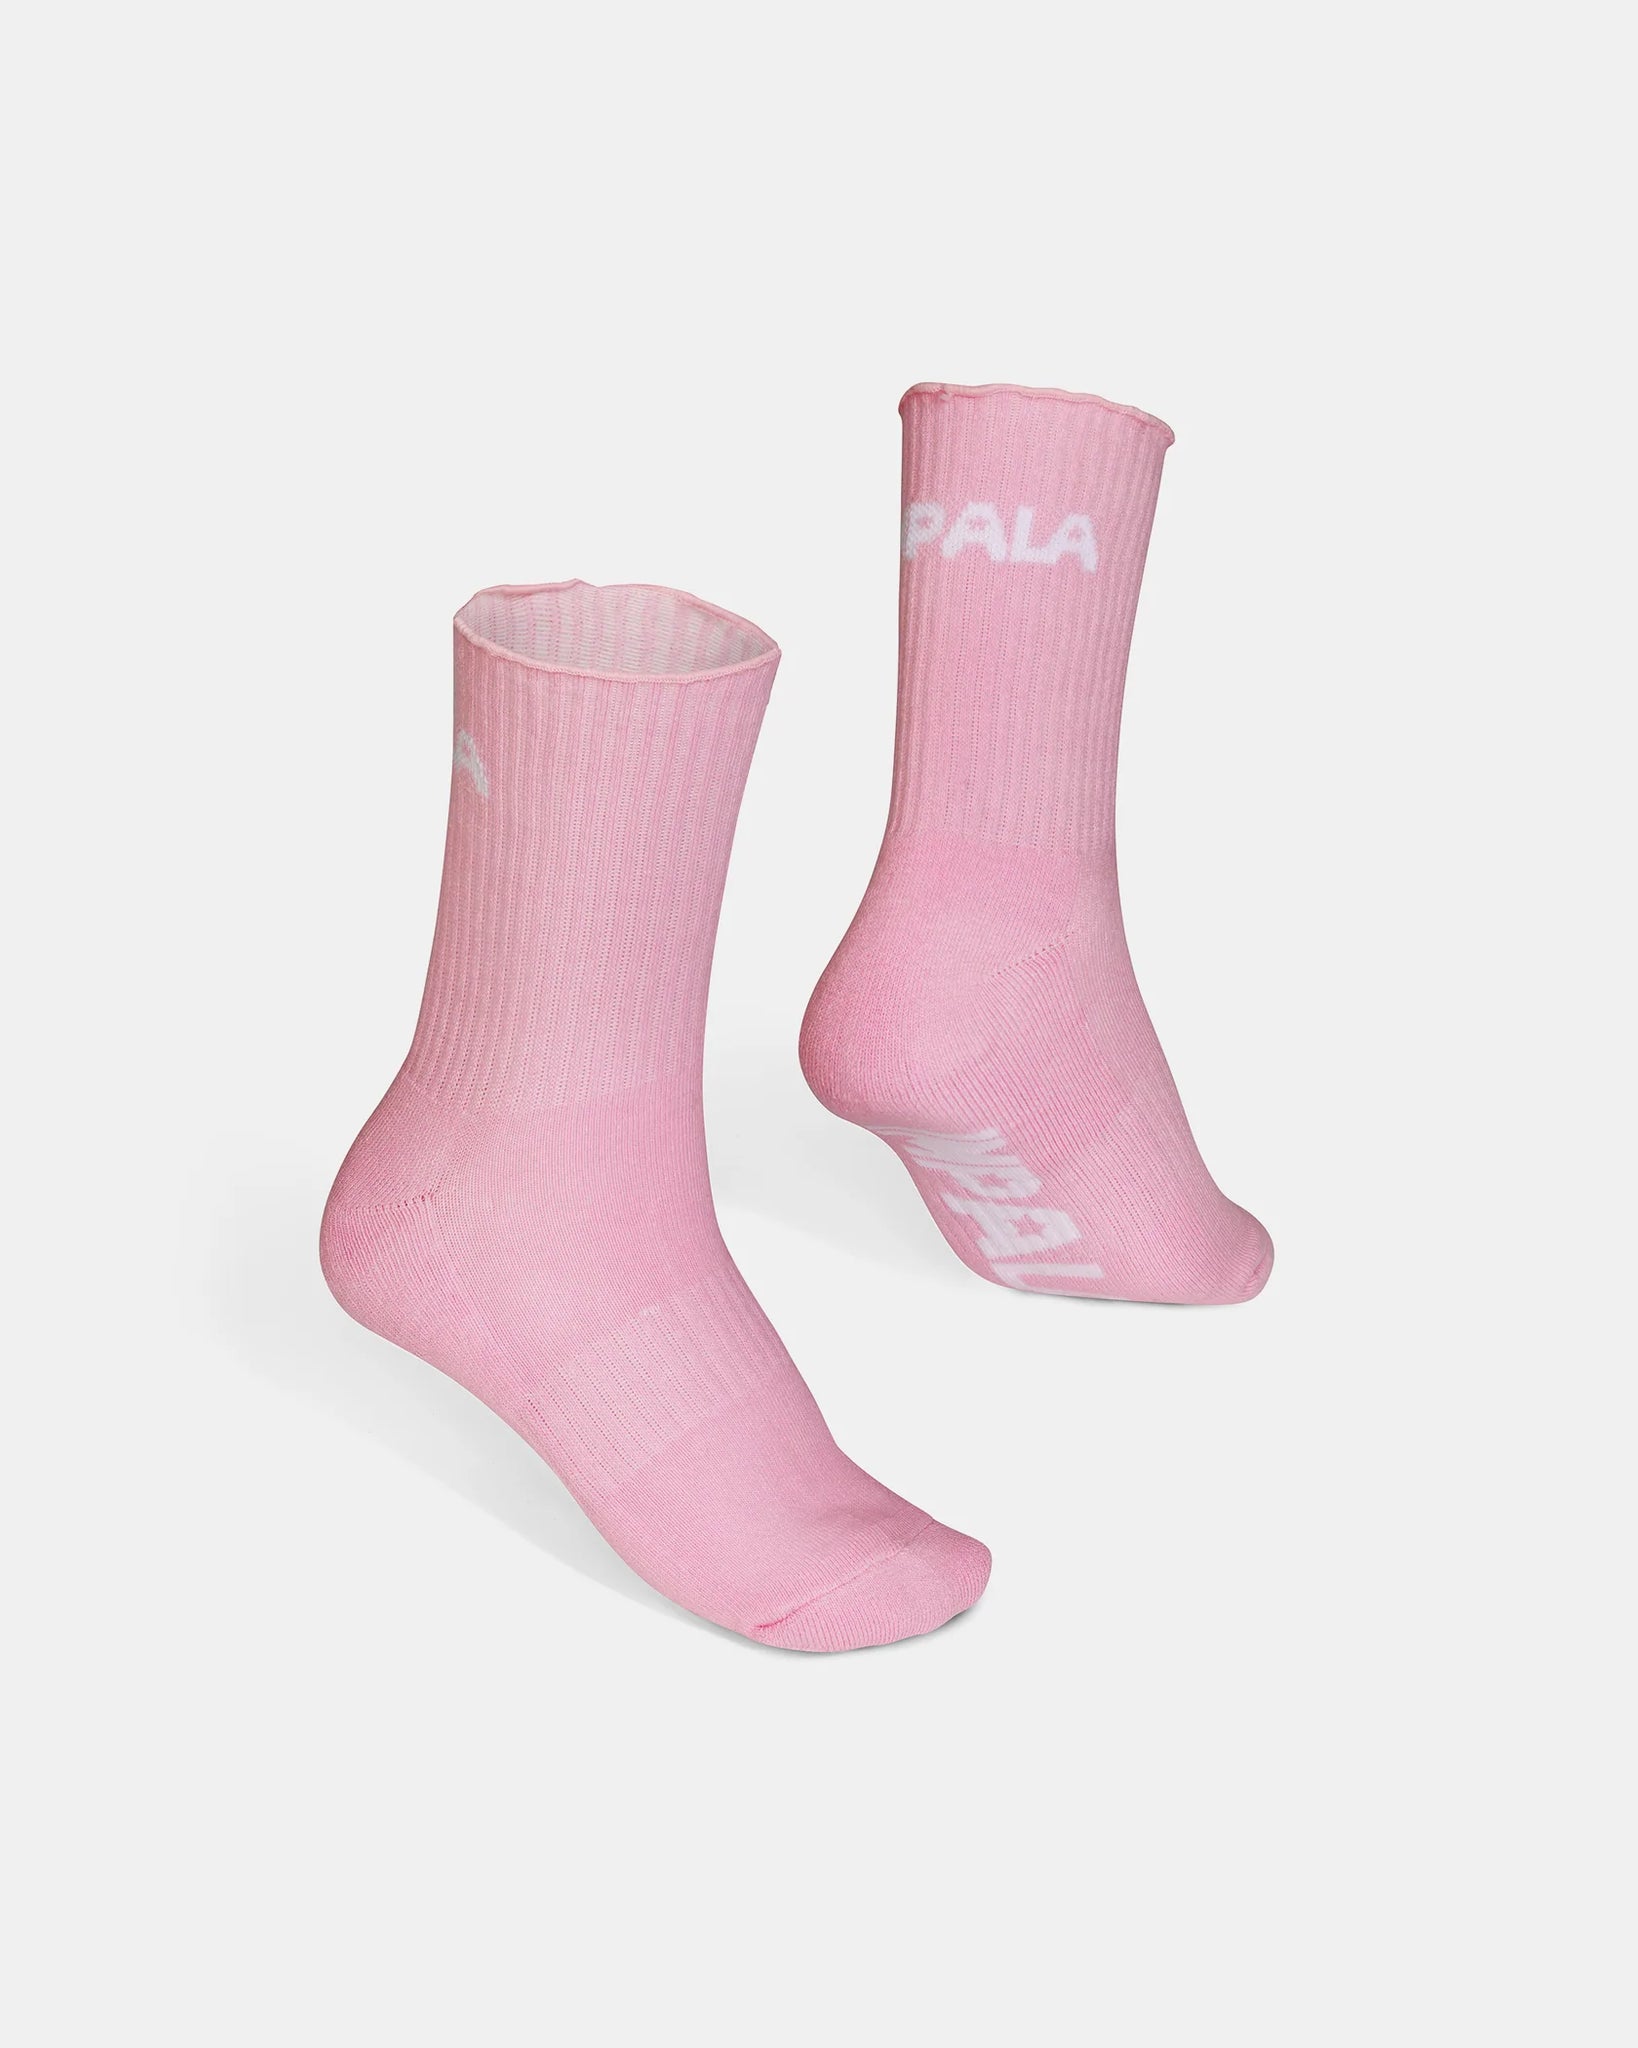 3 Pack Pale Pink Anklet Socks - Small – GripperzSocks